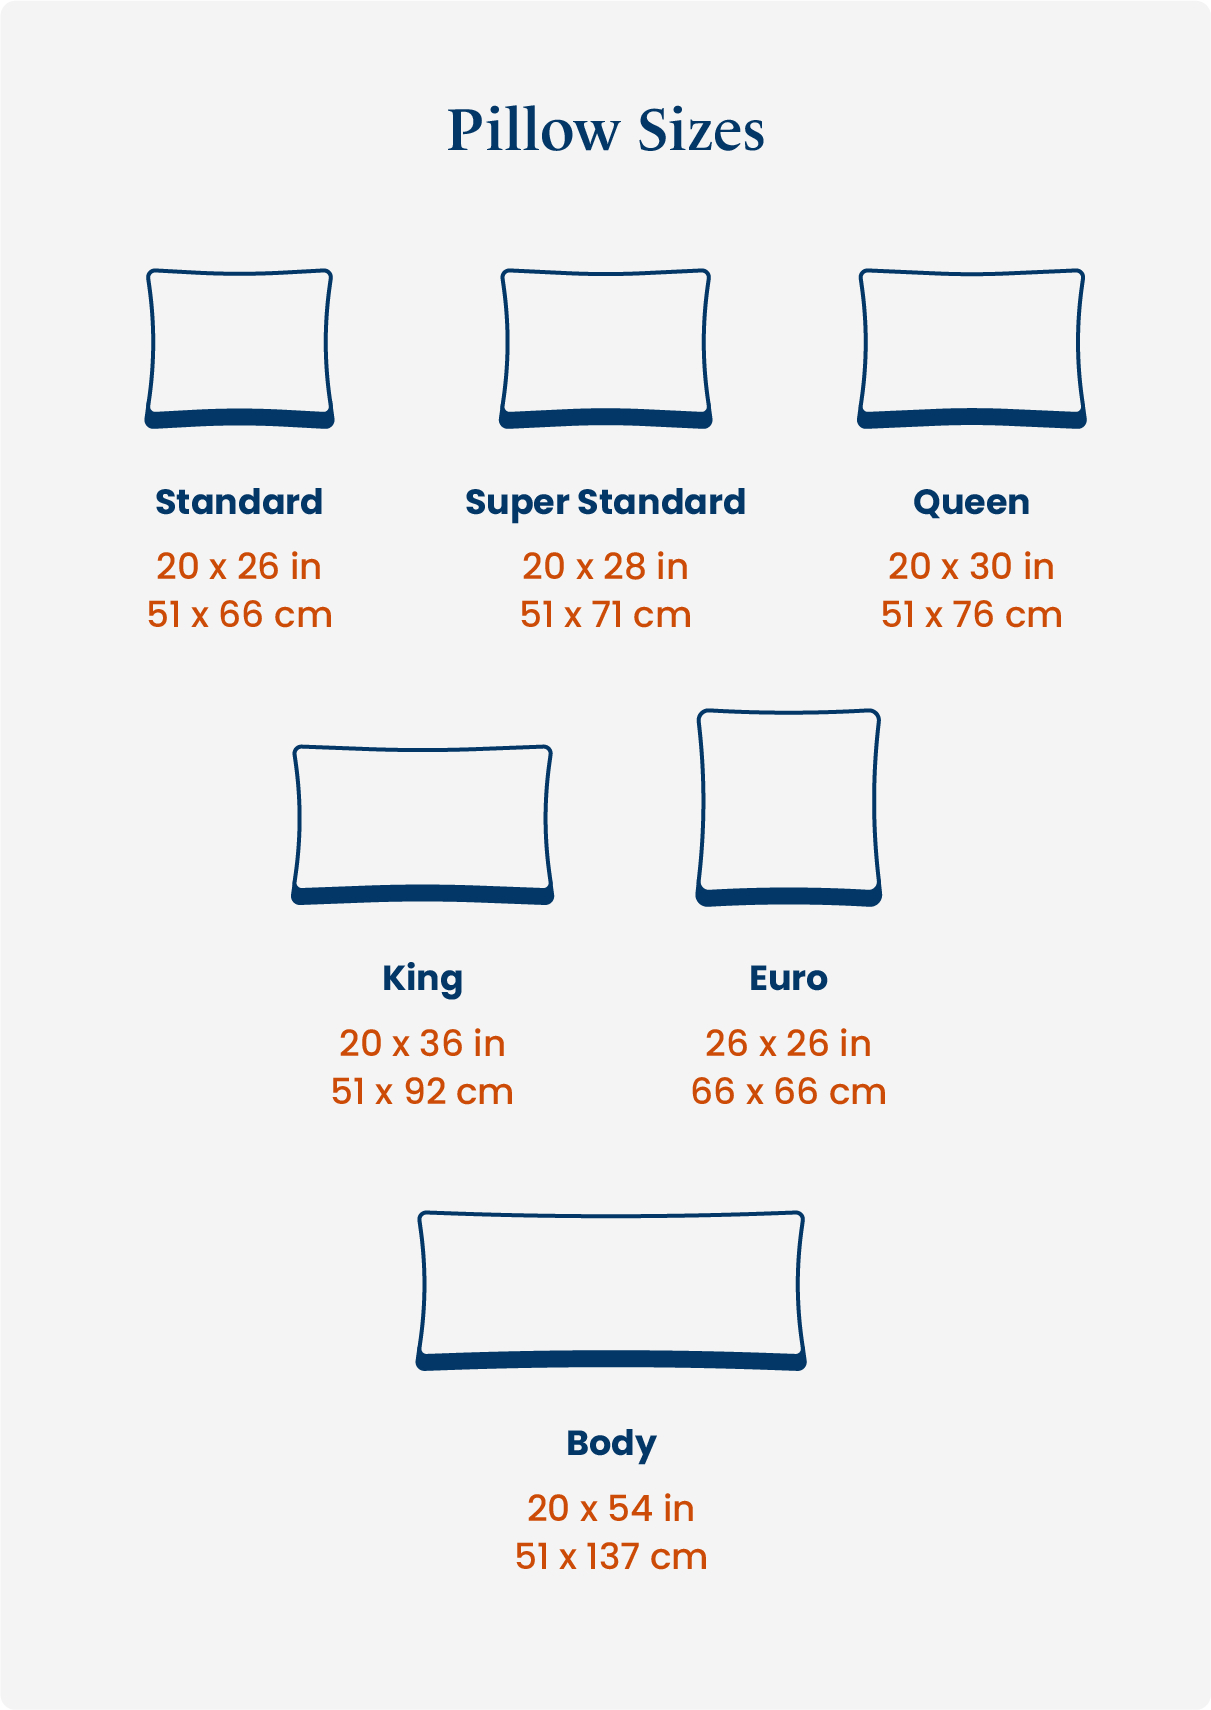 A pillow size chart featuring standard, super, standard, queen, king, Euro, and body pillows.